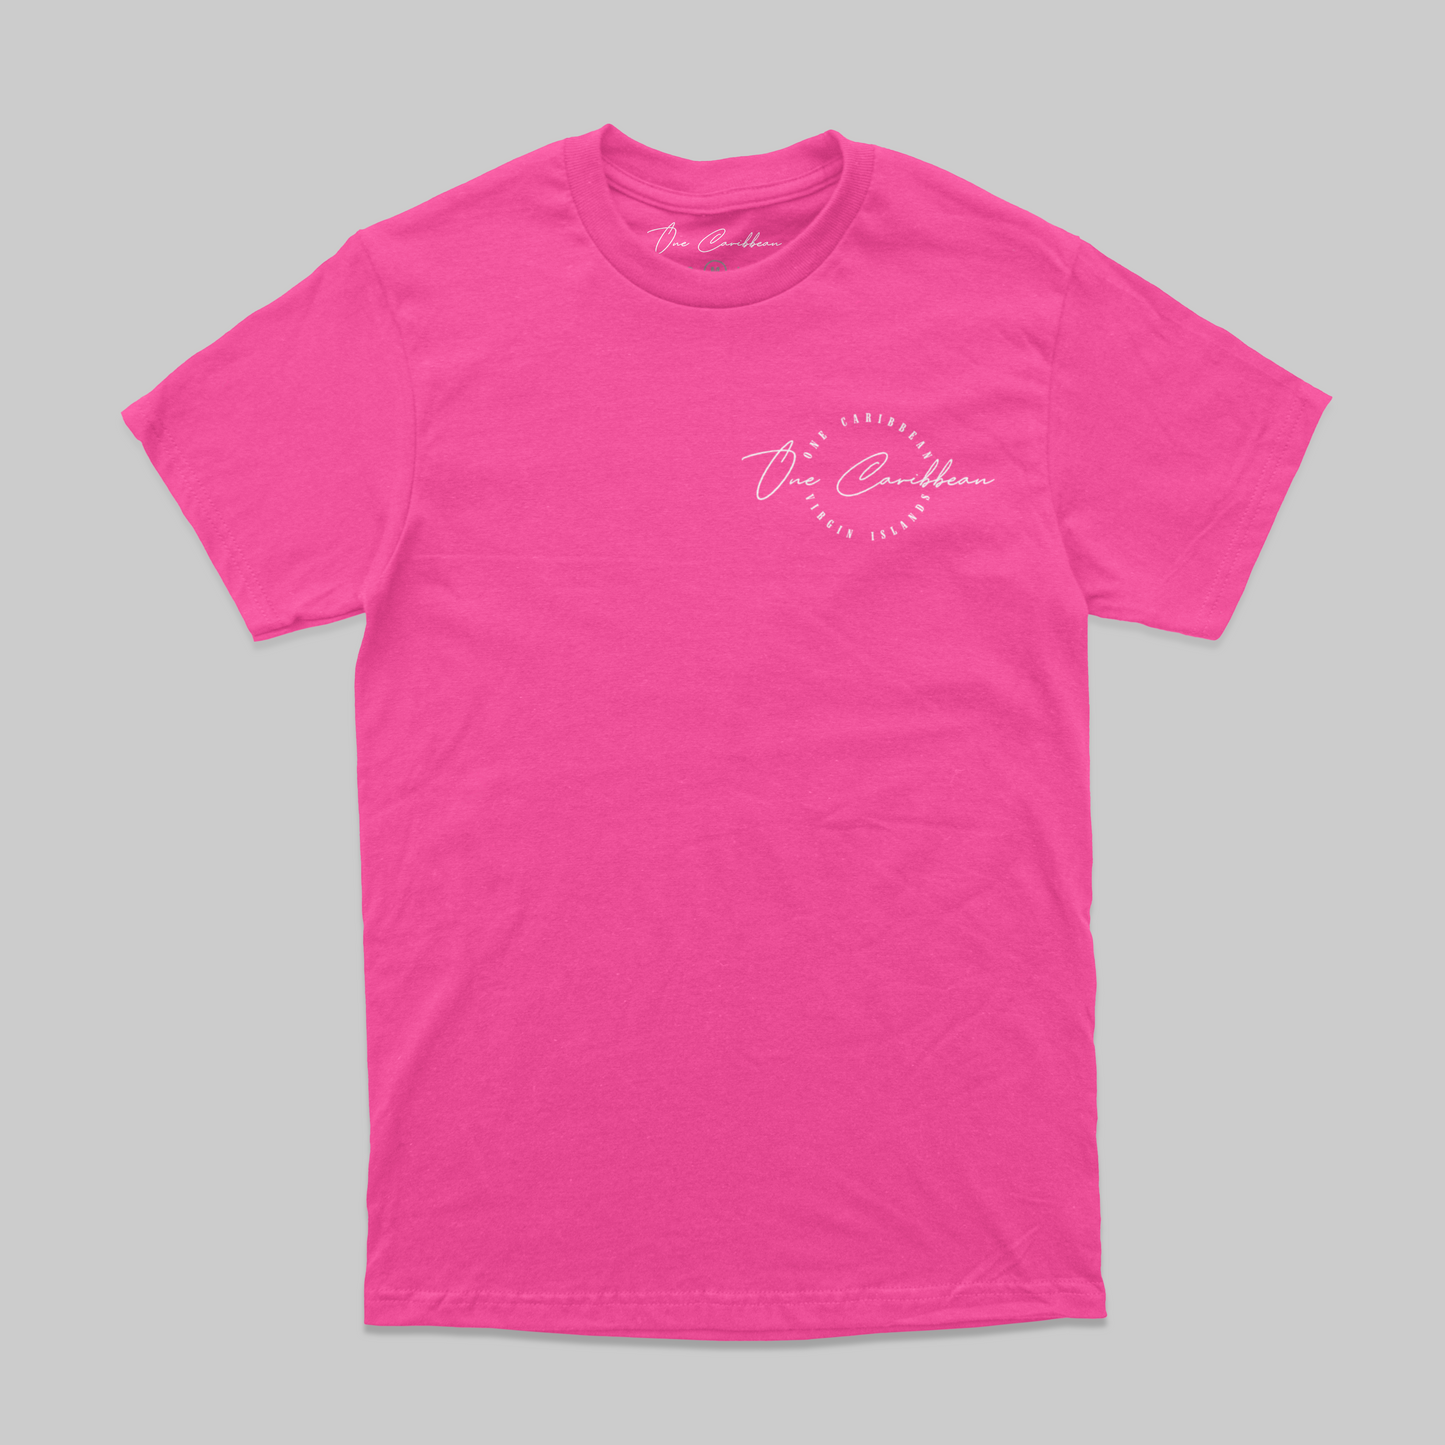 One Caribbean Souvenir Collection T-Shirt (Hot Pink)